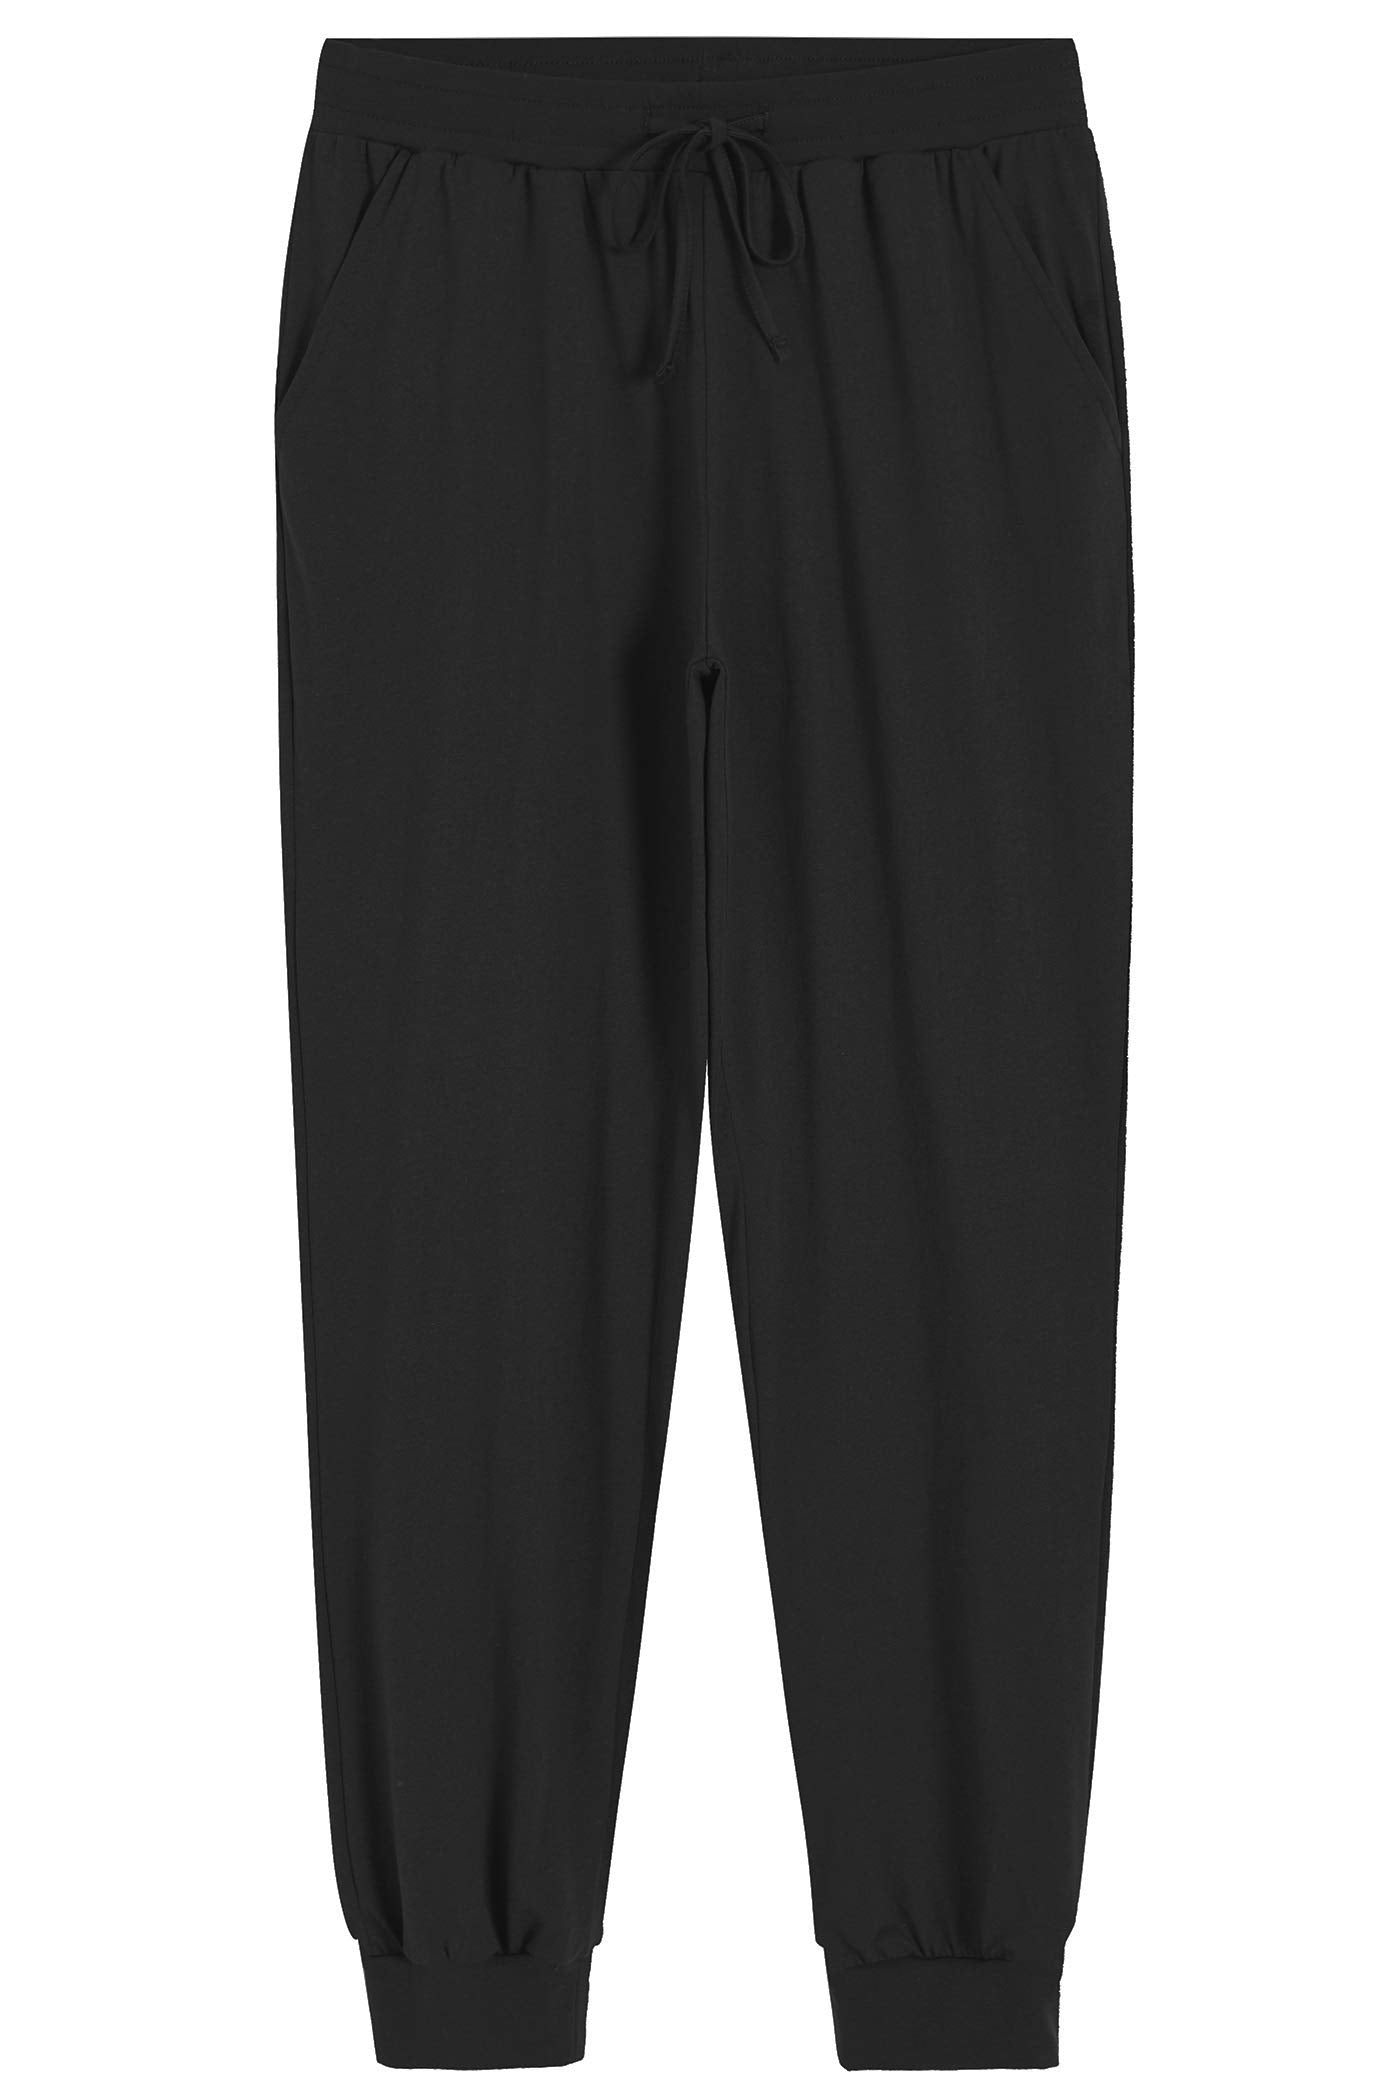 HiddenValor Women's Cotton Knit Loungewear Pajama Pants-Black-S at